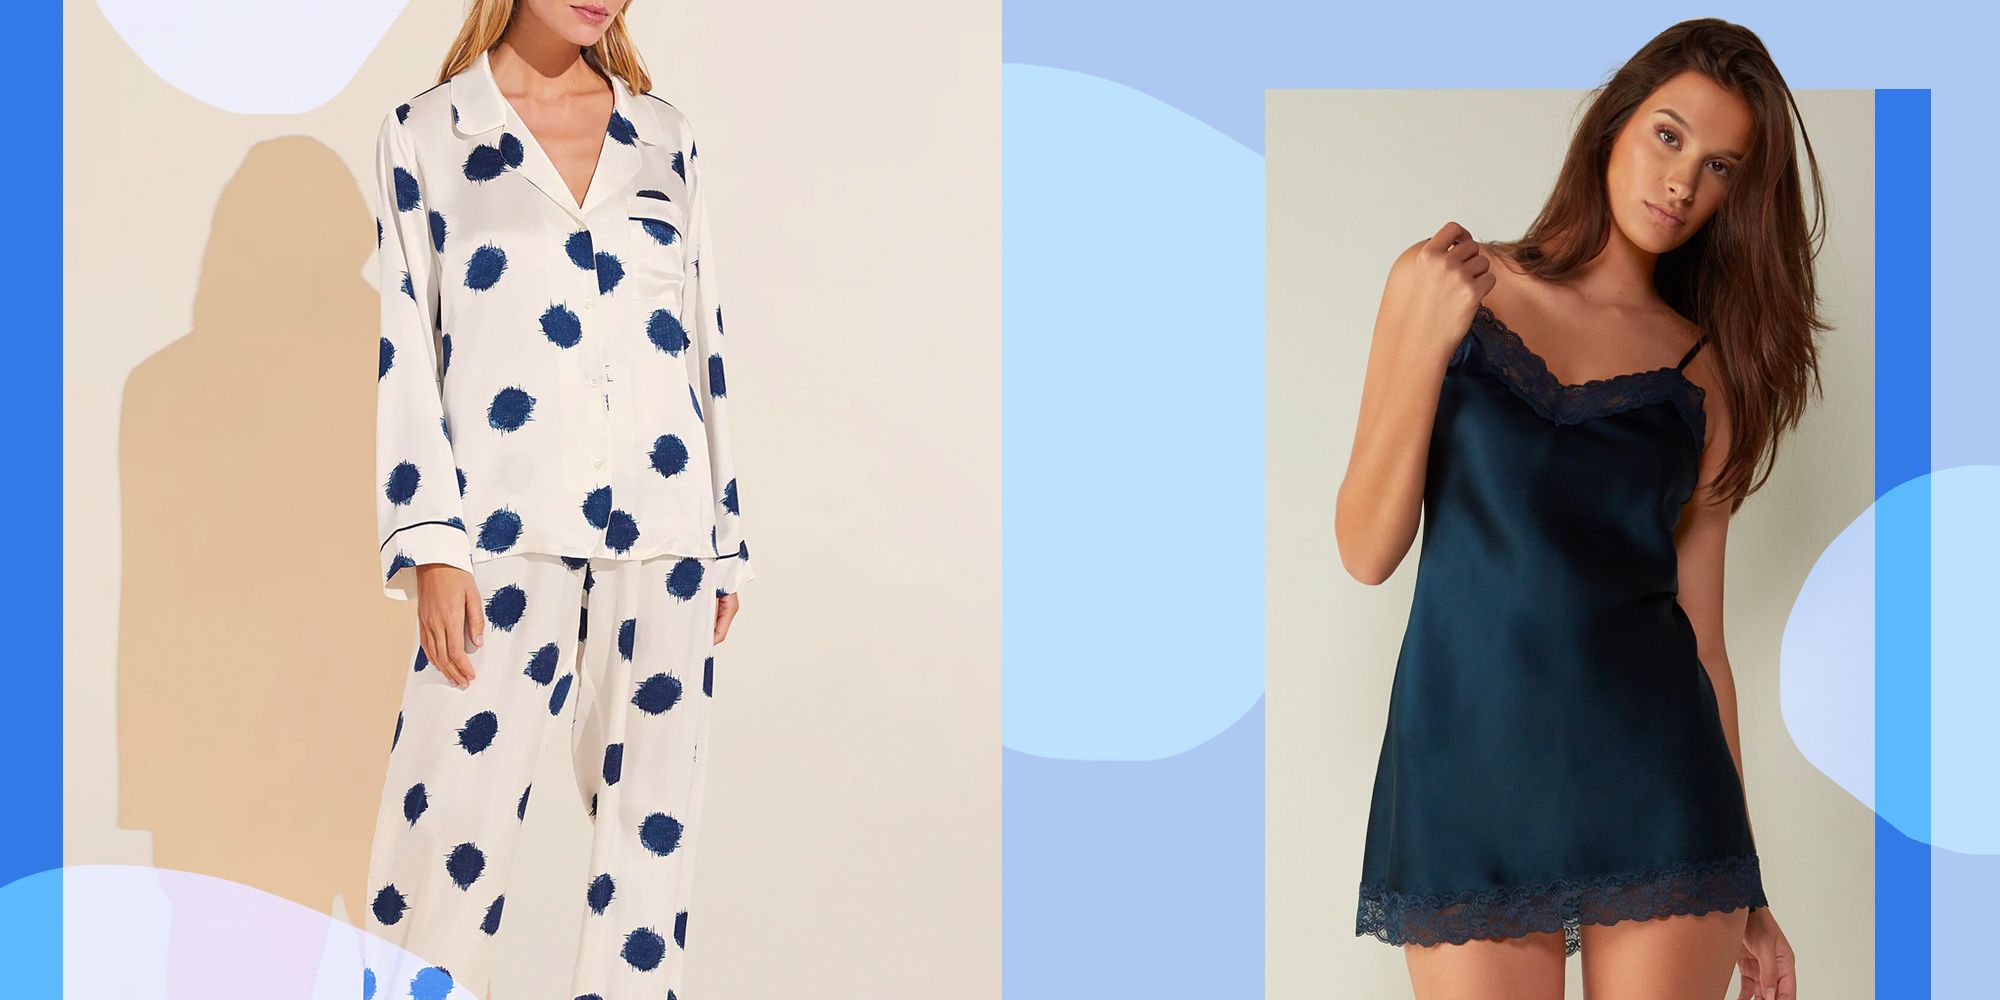 Women's Sleepwear Cute Short Polka Dot Lace-Trim Pajama Set PJs Nightgown